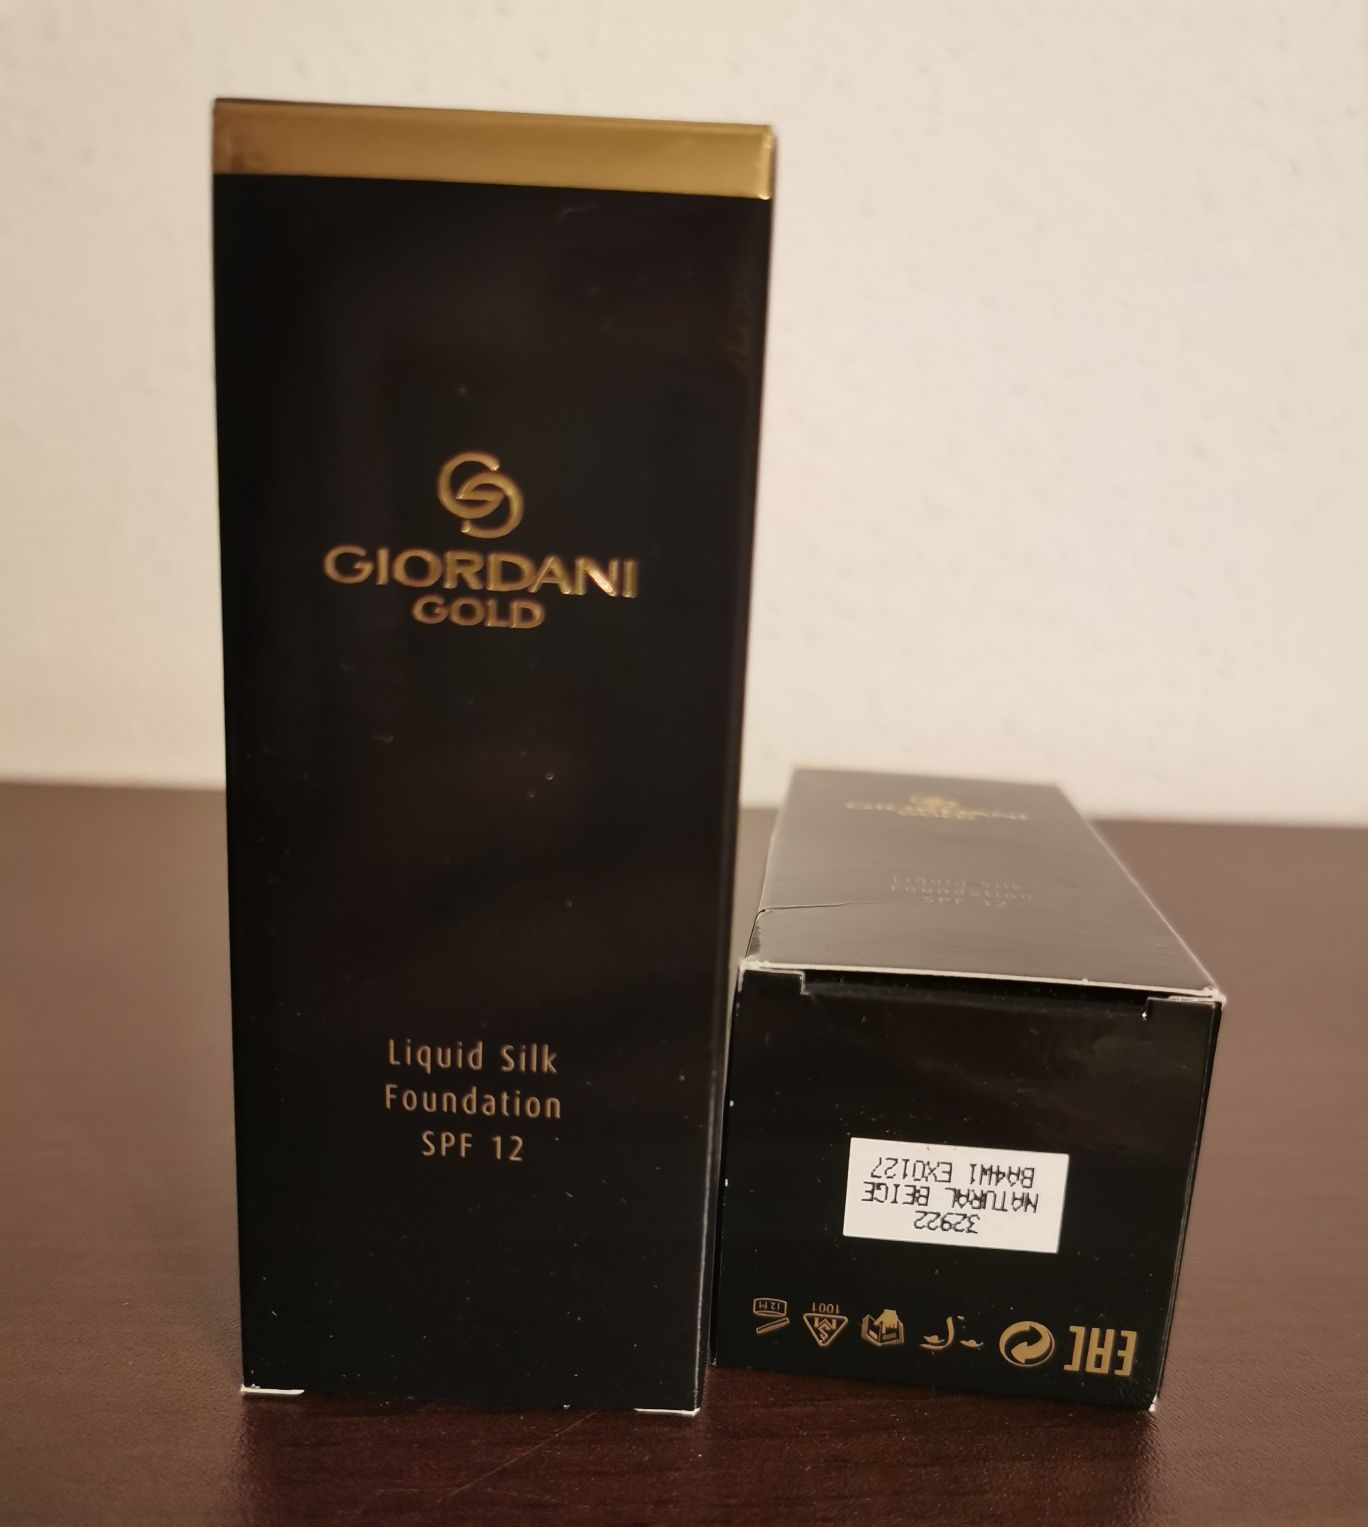 Podkład Liquid Silk Giordani Gold od Oriflame, okazja! Natural Beige